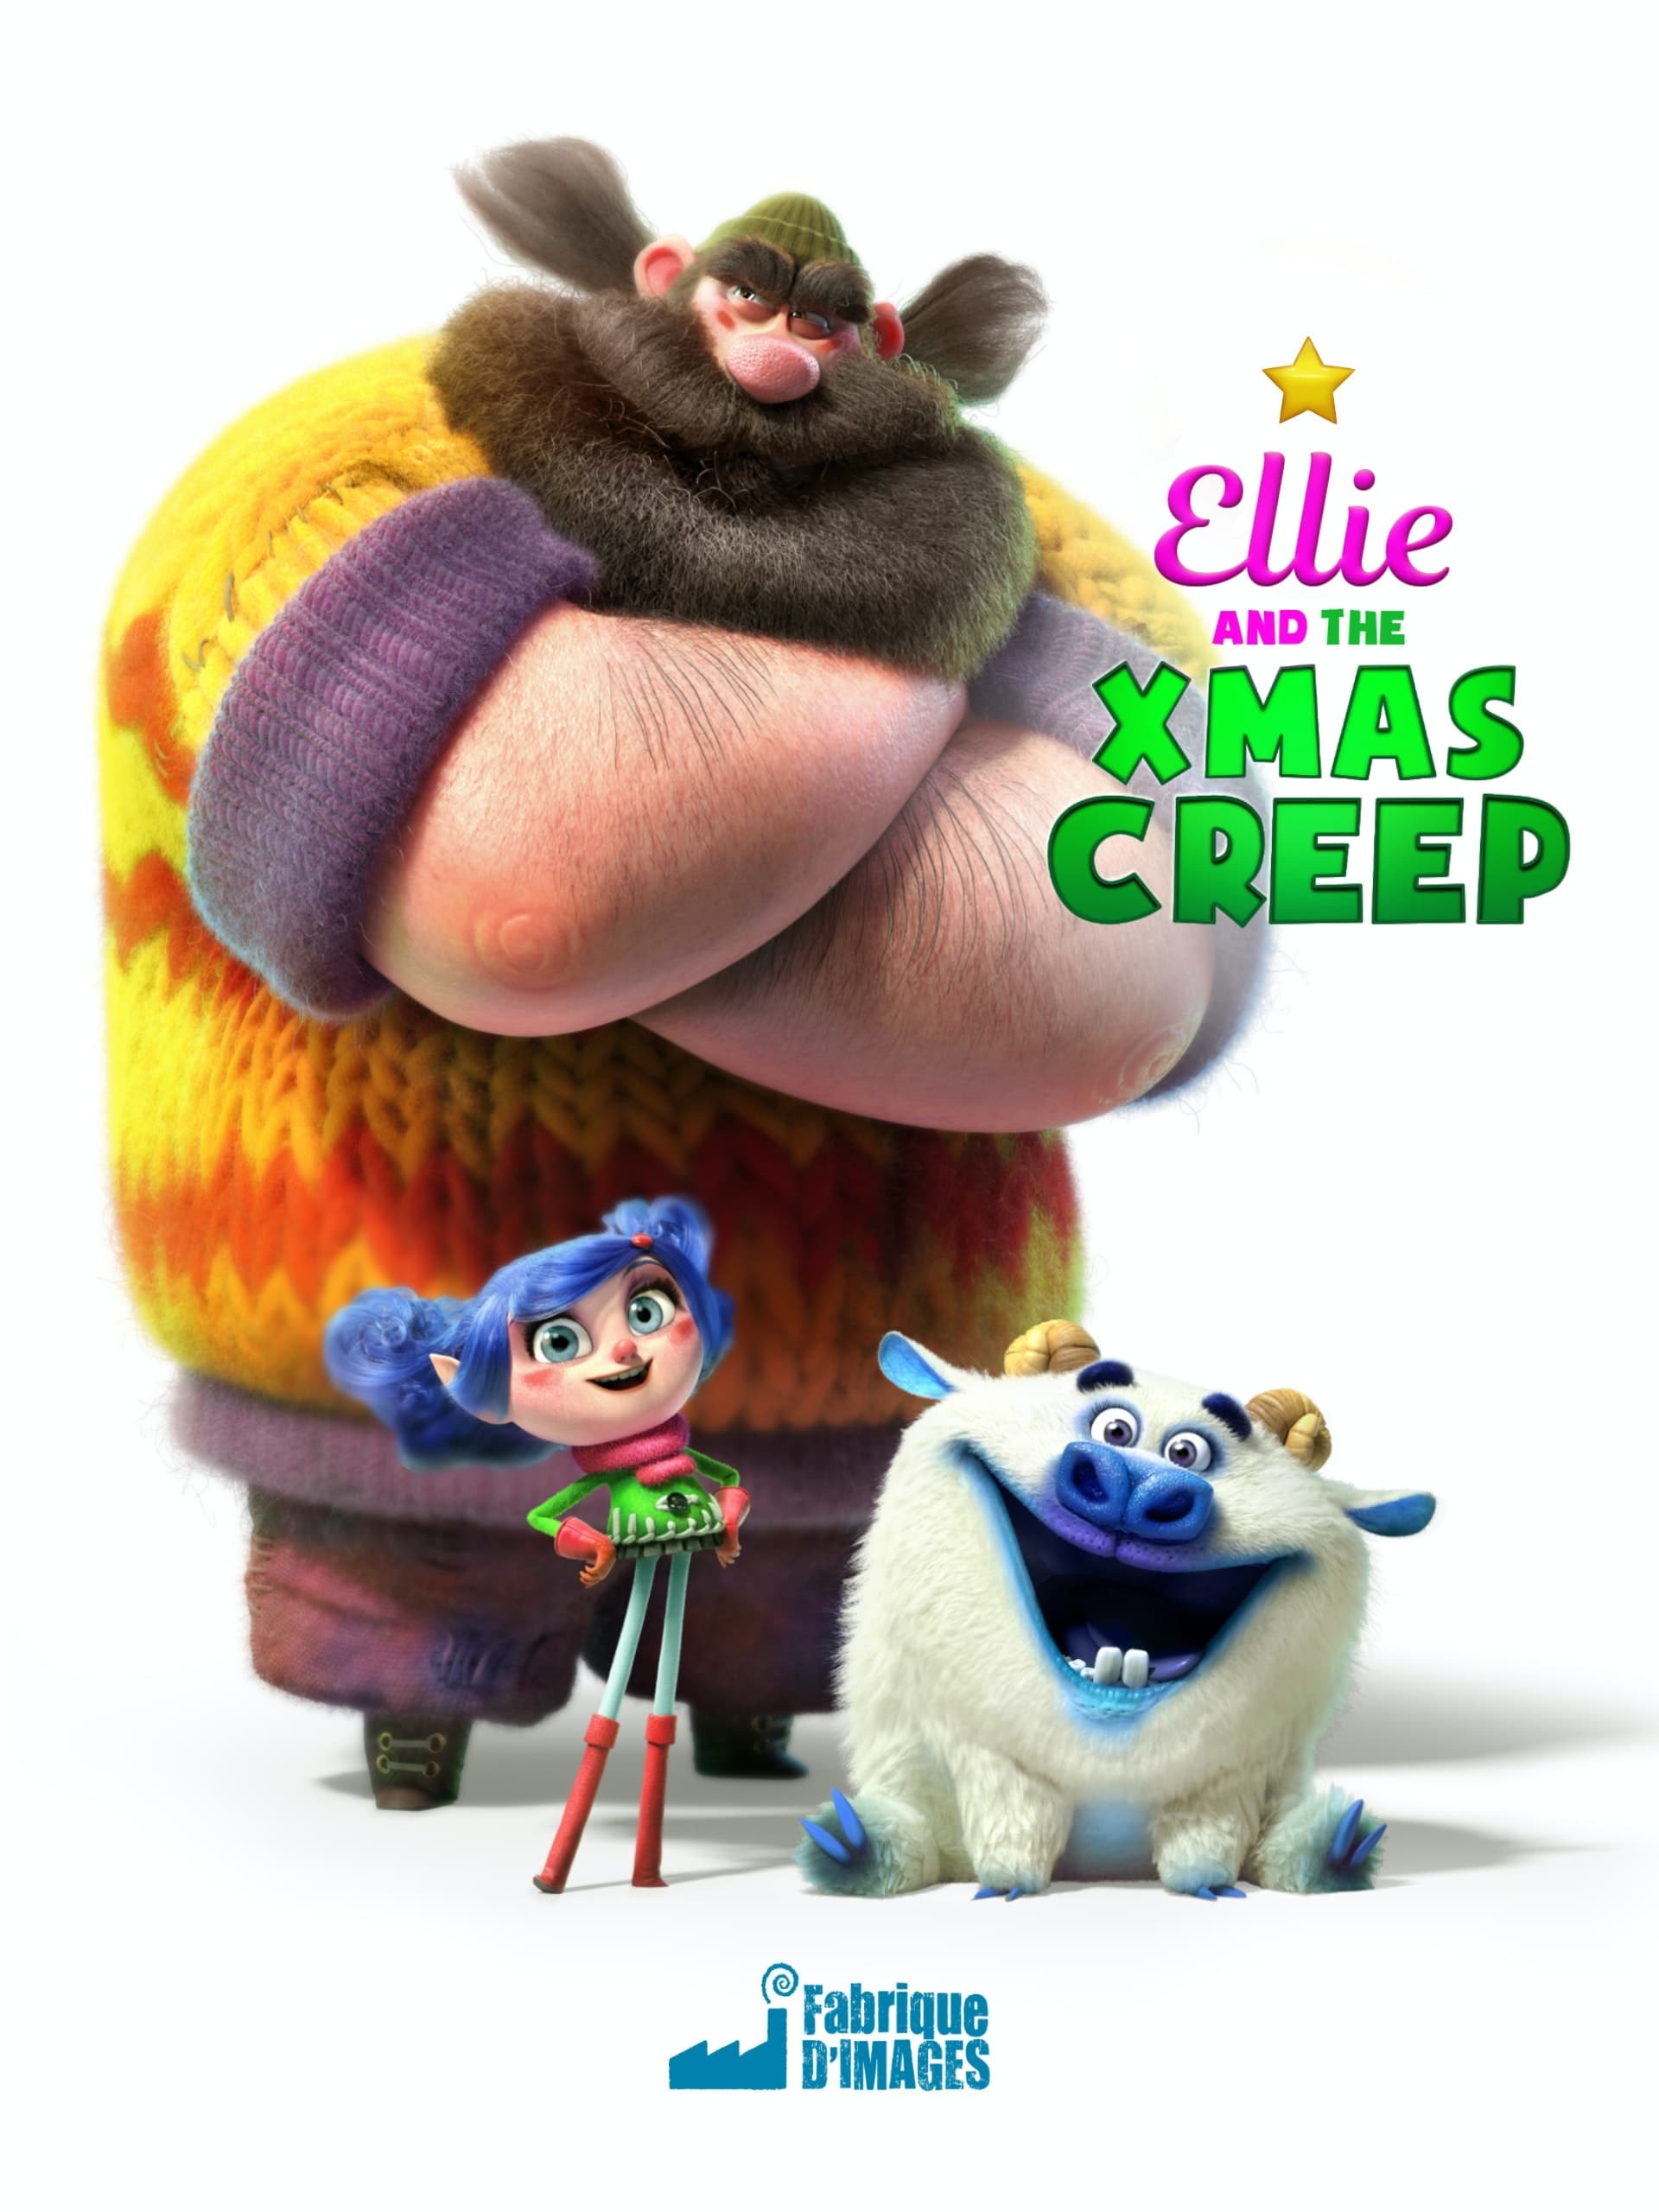 Ellie and the Christmas Creep